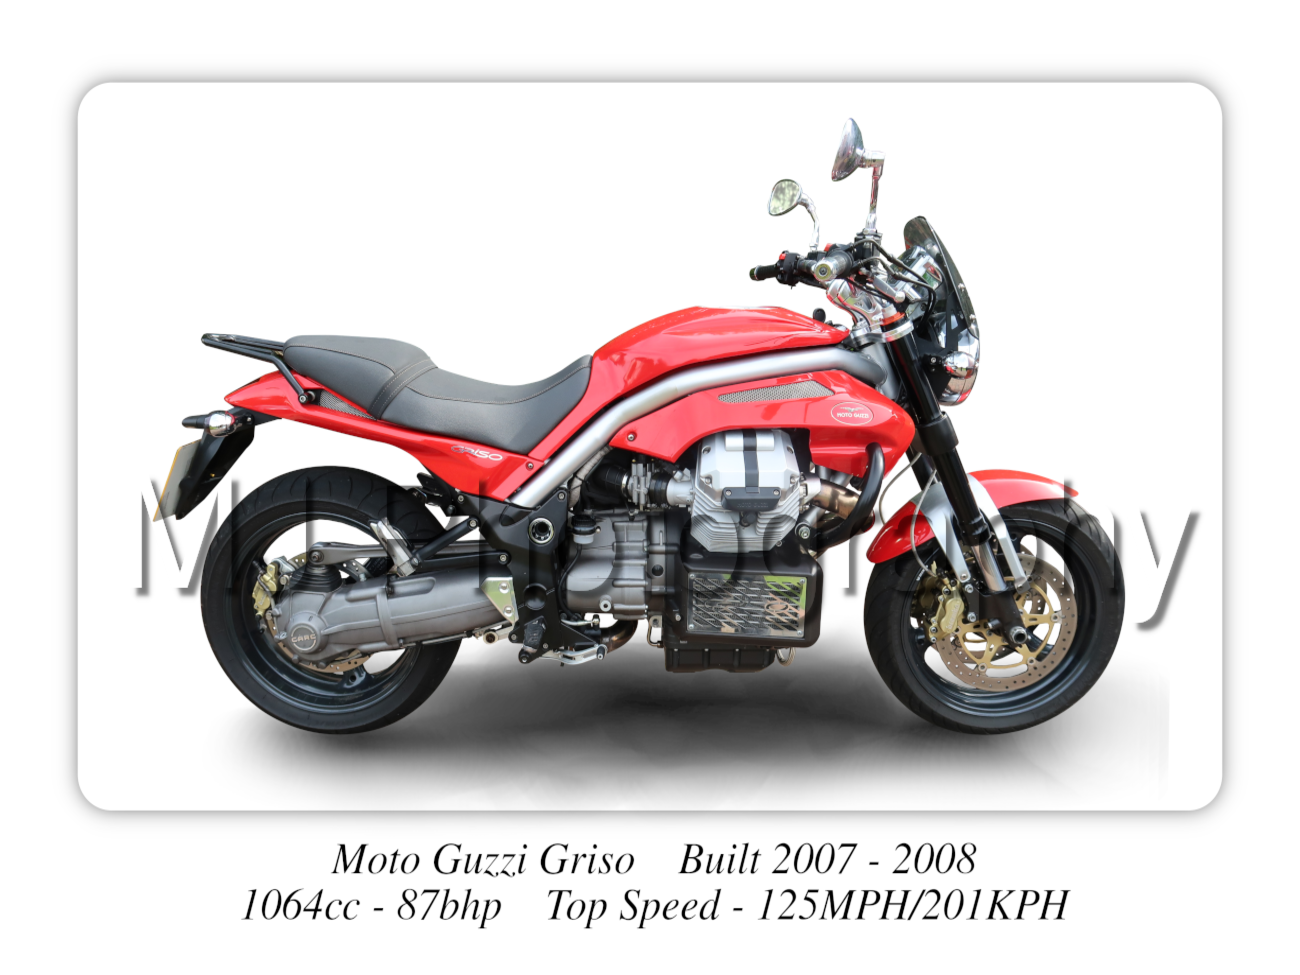 Moto Guzzi Griso Motorcycle - A3/A4 Size Print Poster